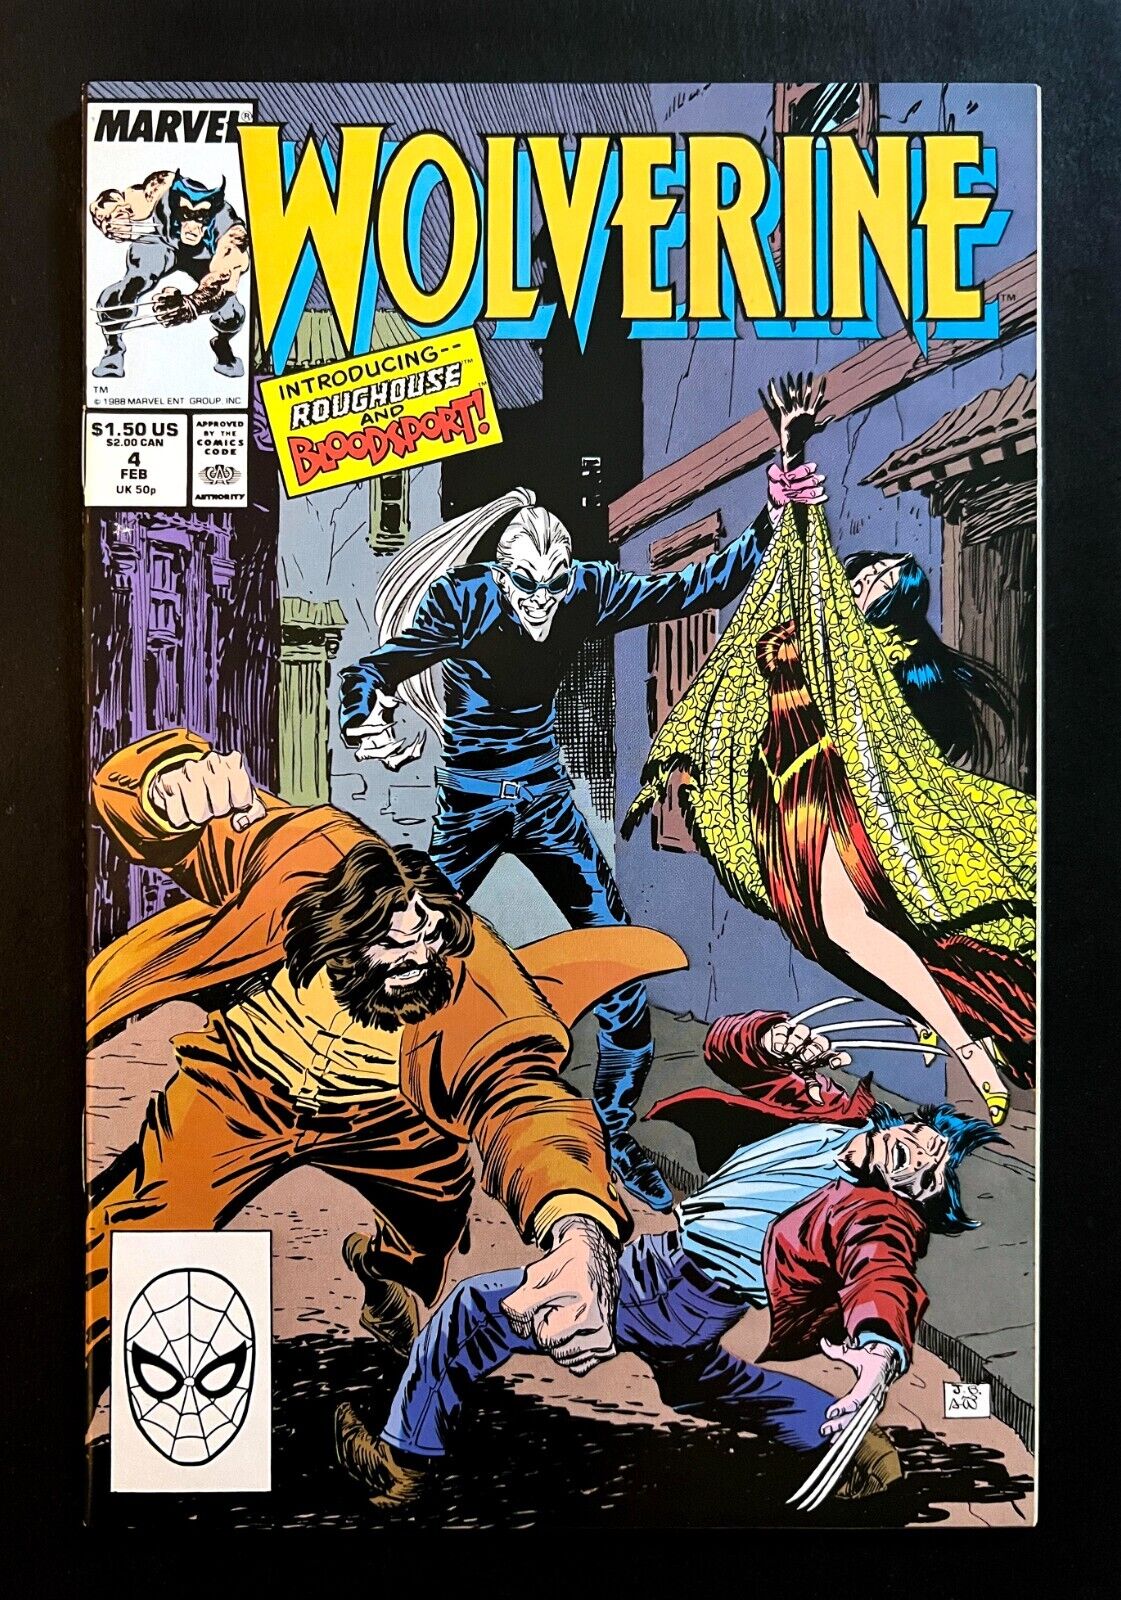 WOLVERINE #4 Hi-Grade John Buscema Barry Windsor-Smith Marvel Comics 1988